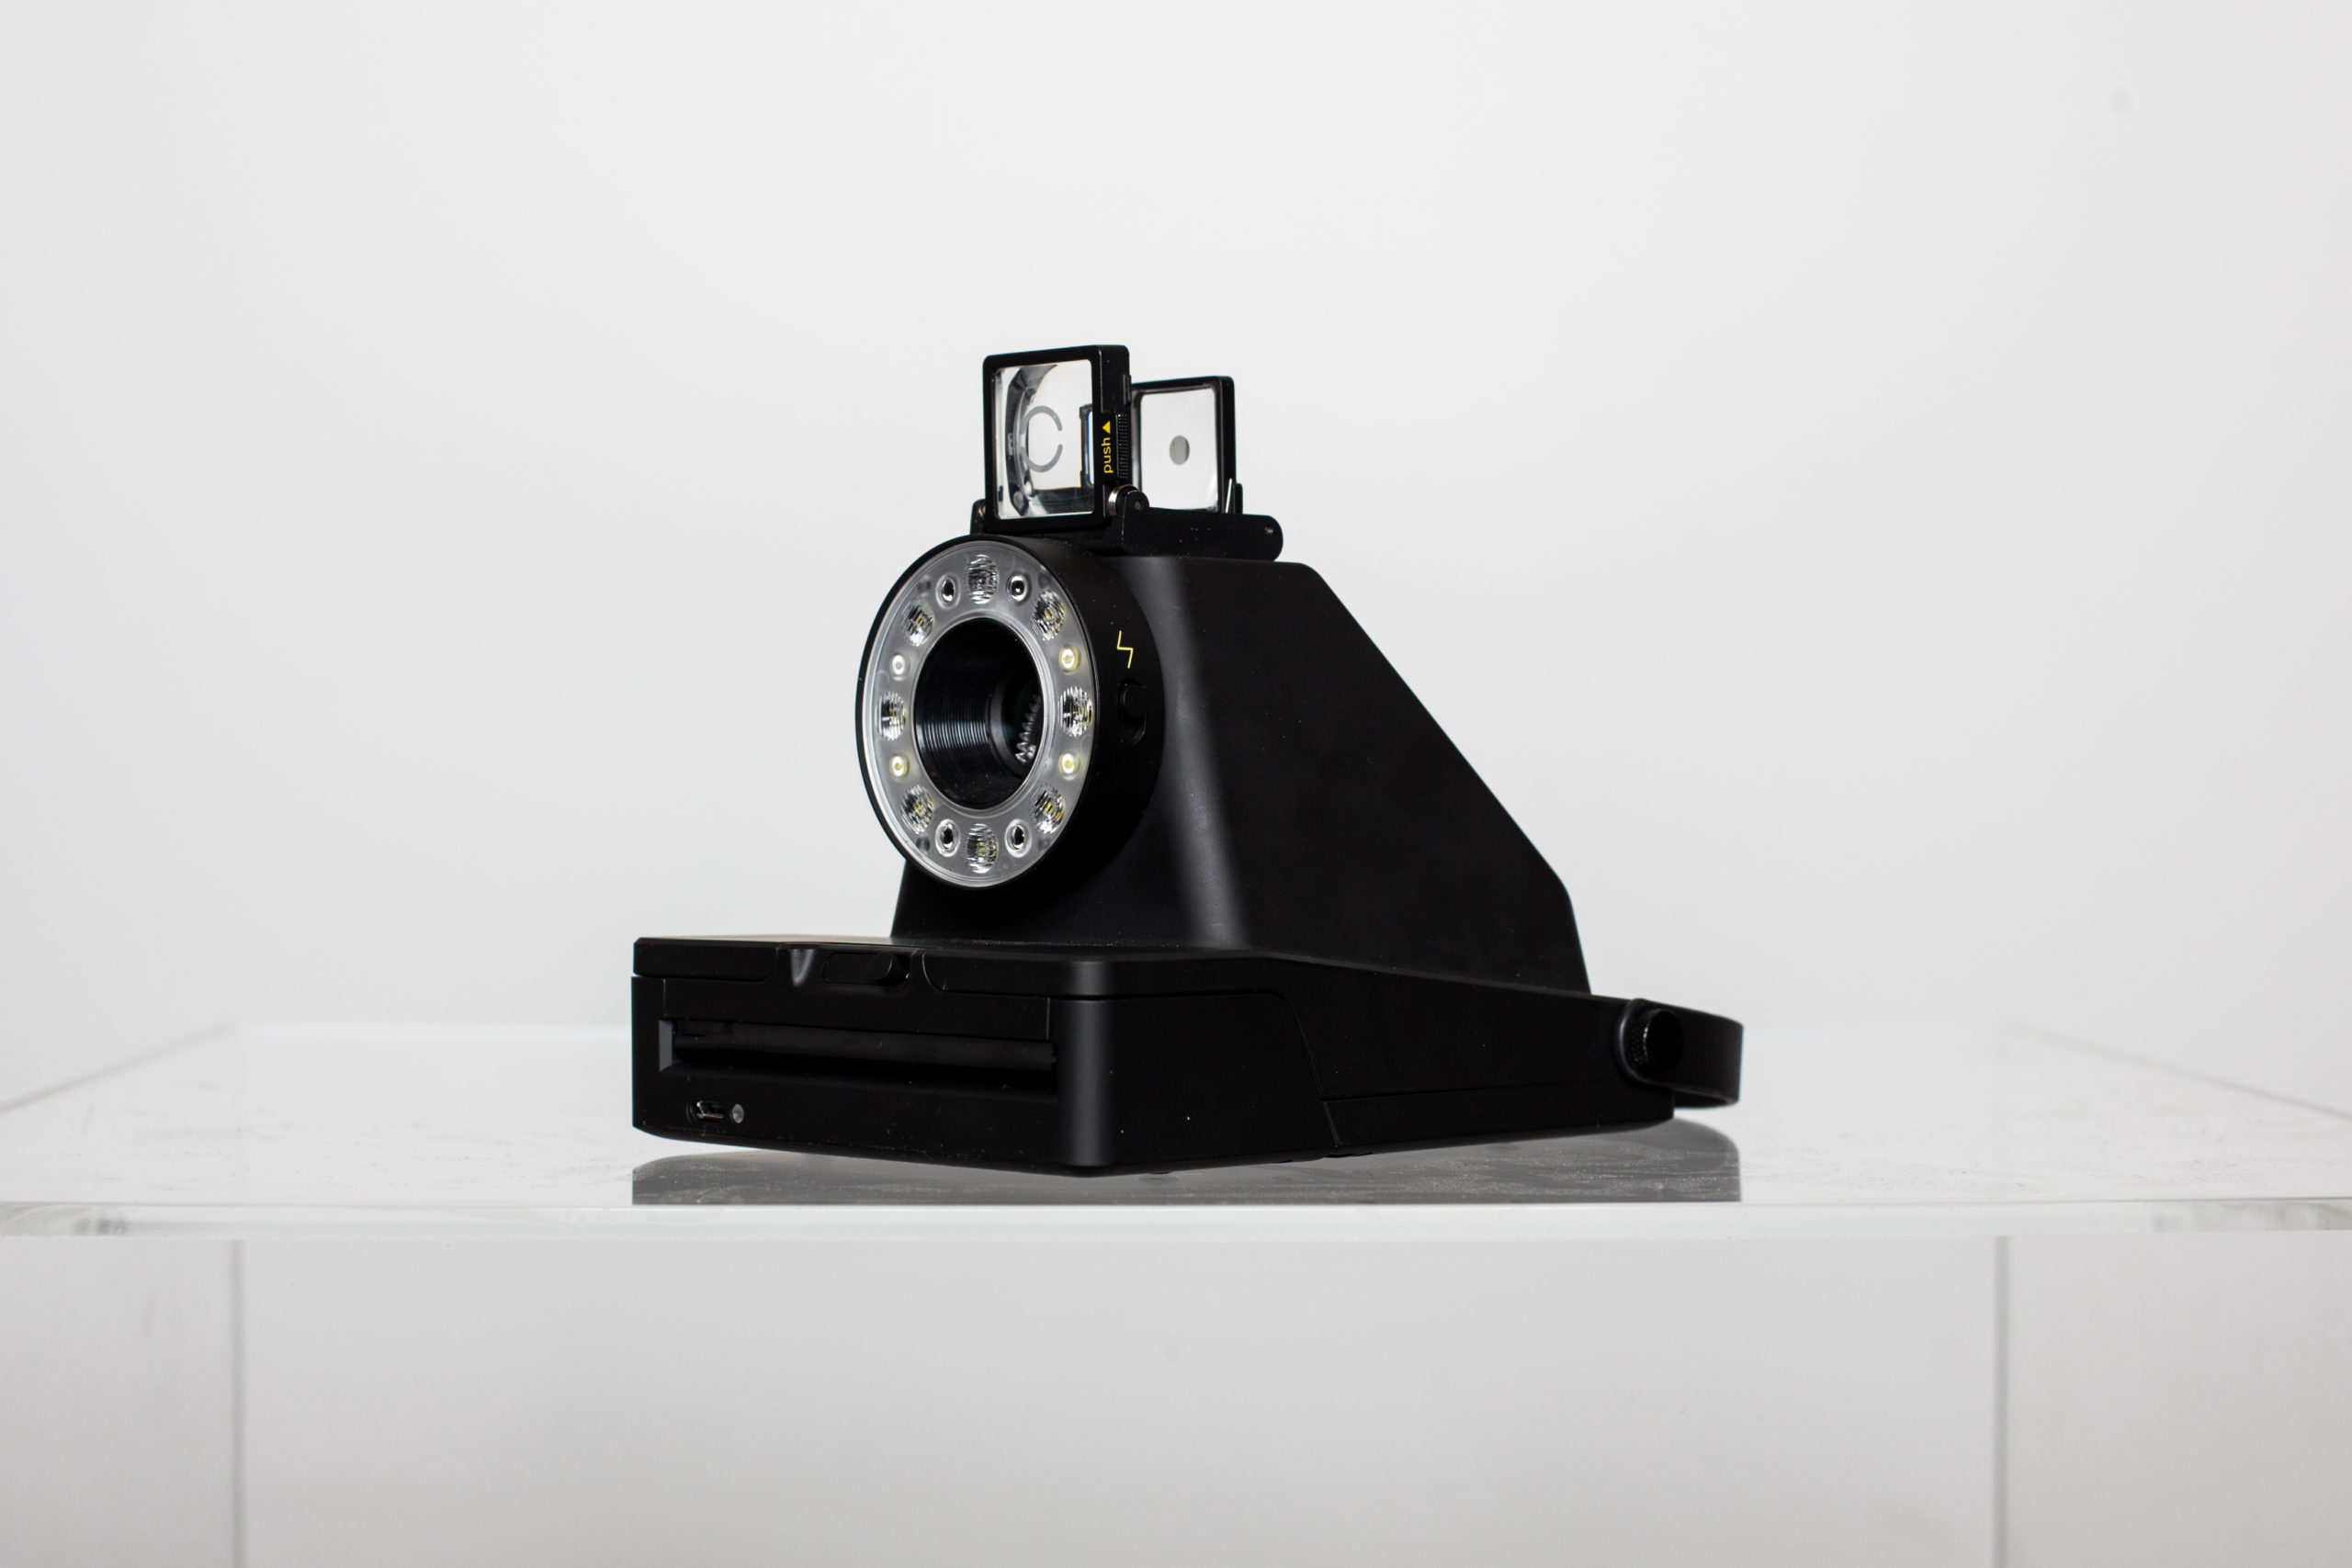 Impossible Project I-1 Polaroid Camera: The Gizmodo Review